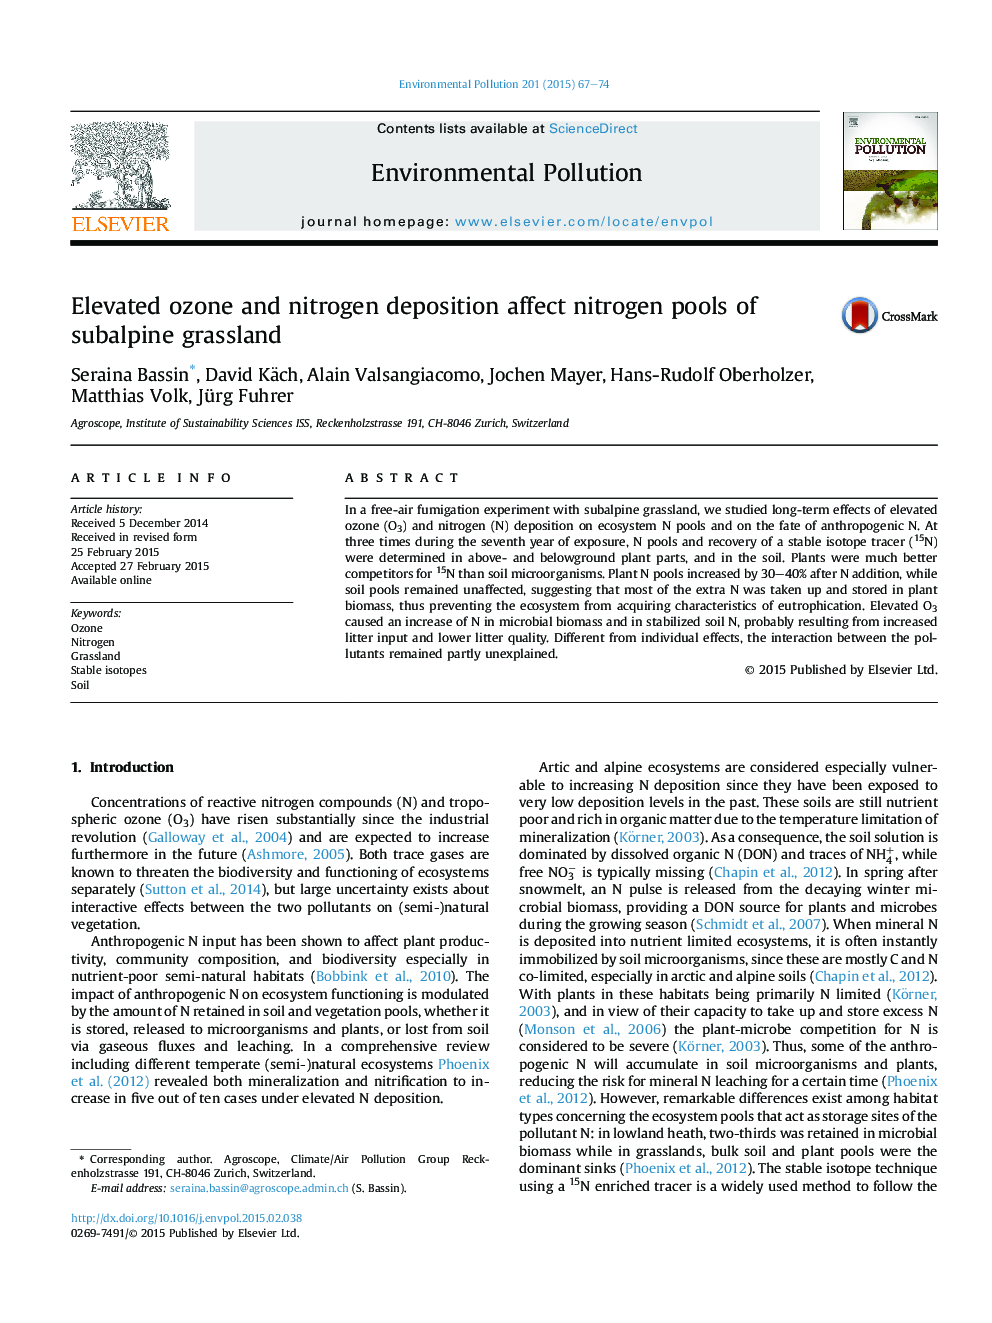 Elevated ozone and nitrogen deposition affect nitrogen pools of subalpine grassland